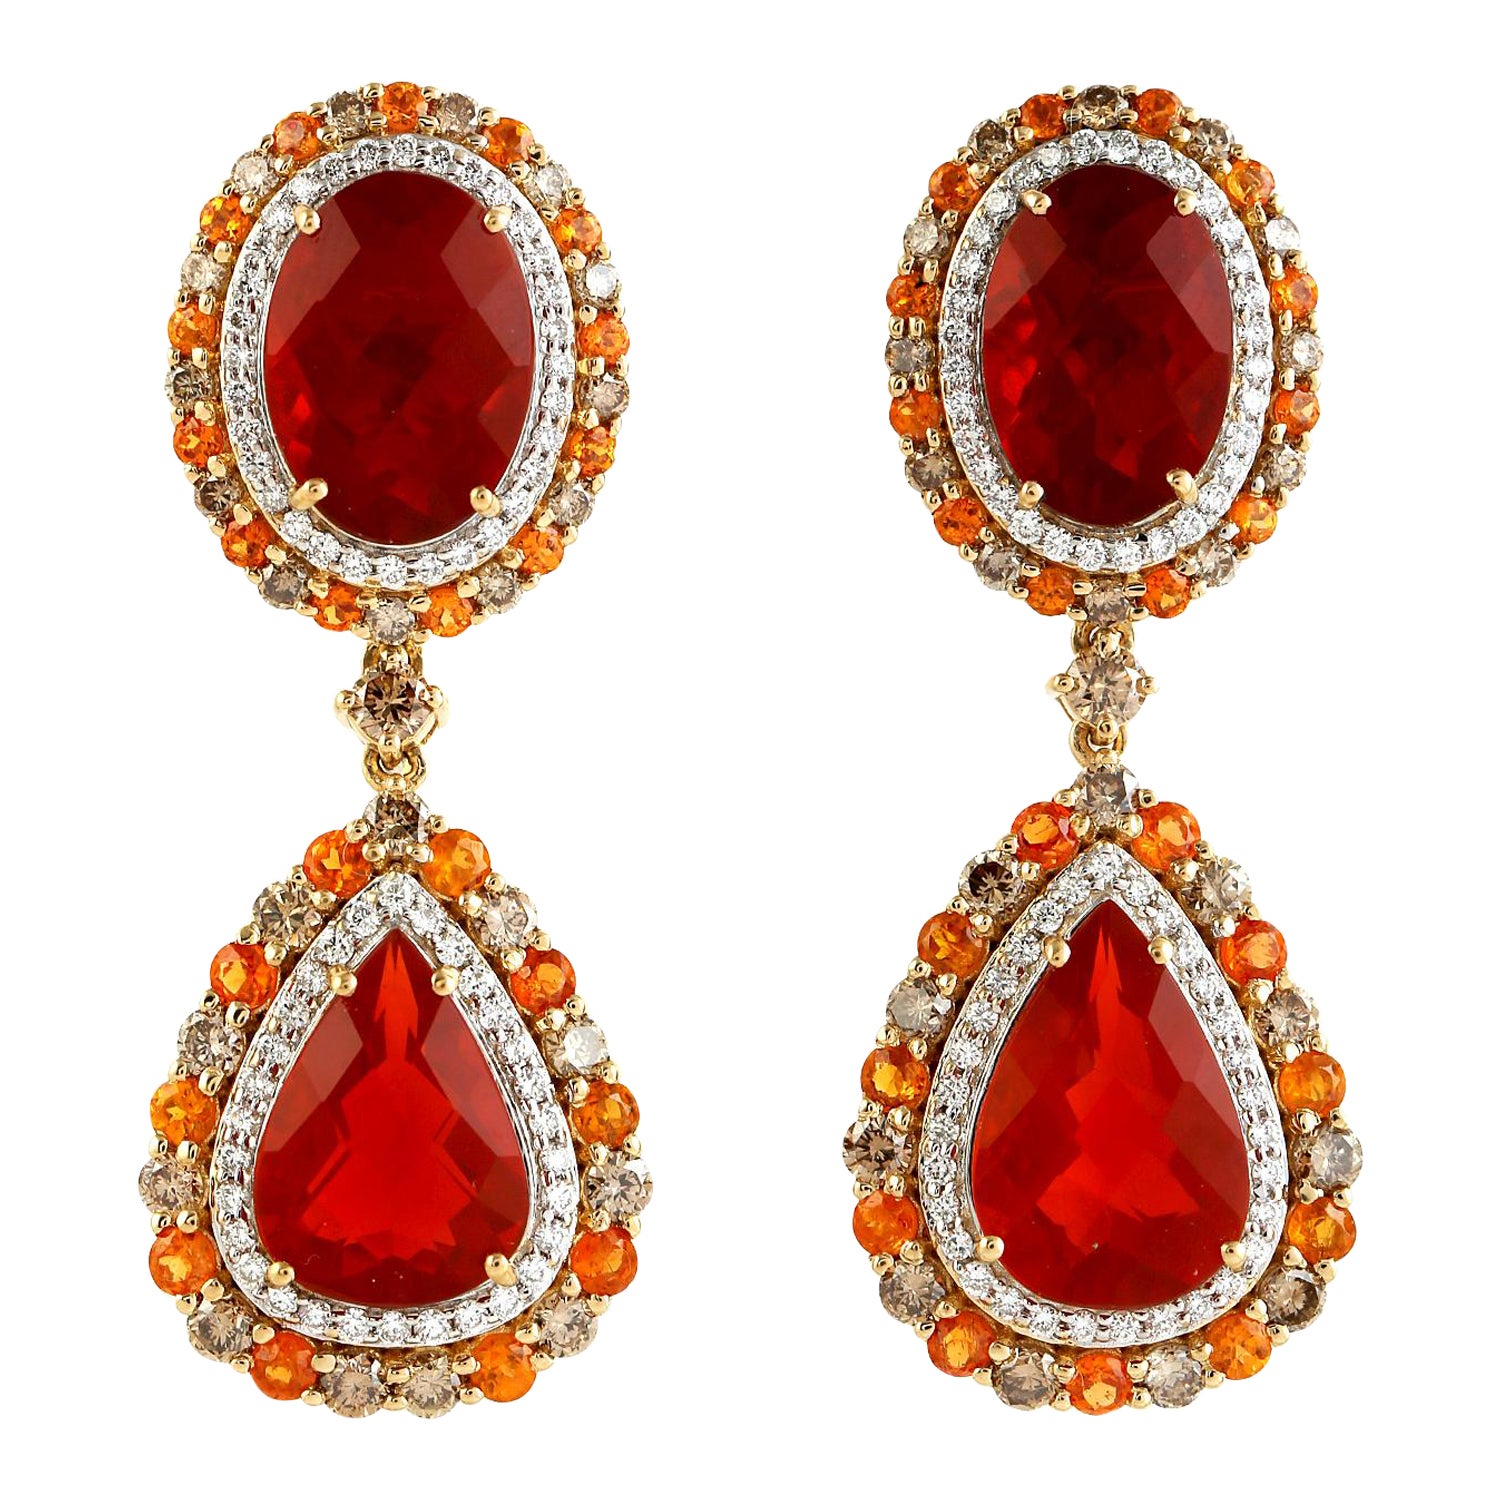 Two Tier Mexican Fire Opal Earrings With Mandarine Garnet In 18k Yellow Gold For Sale